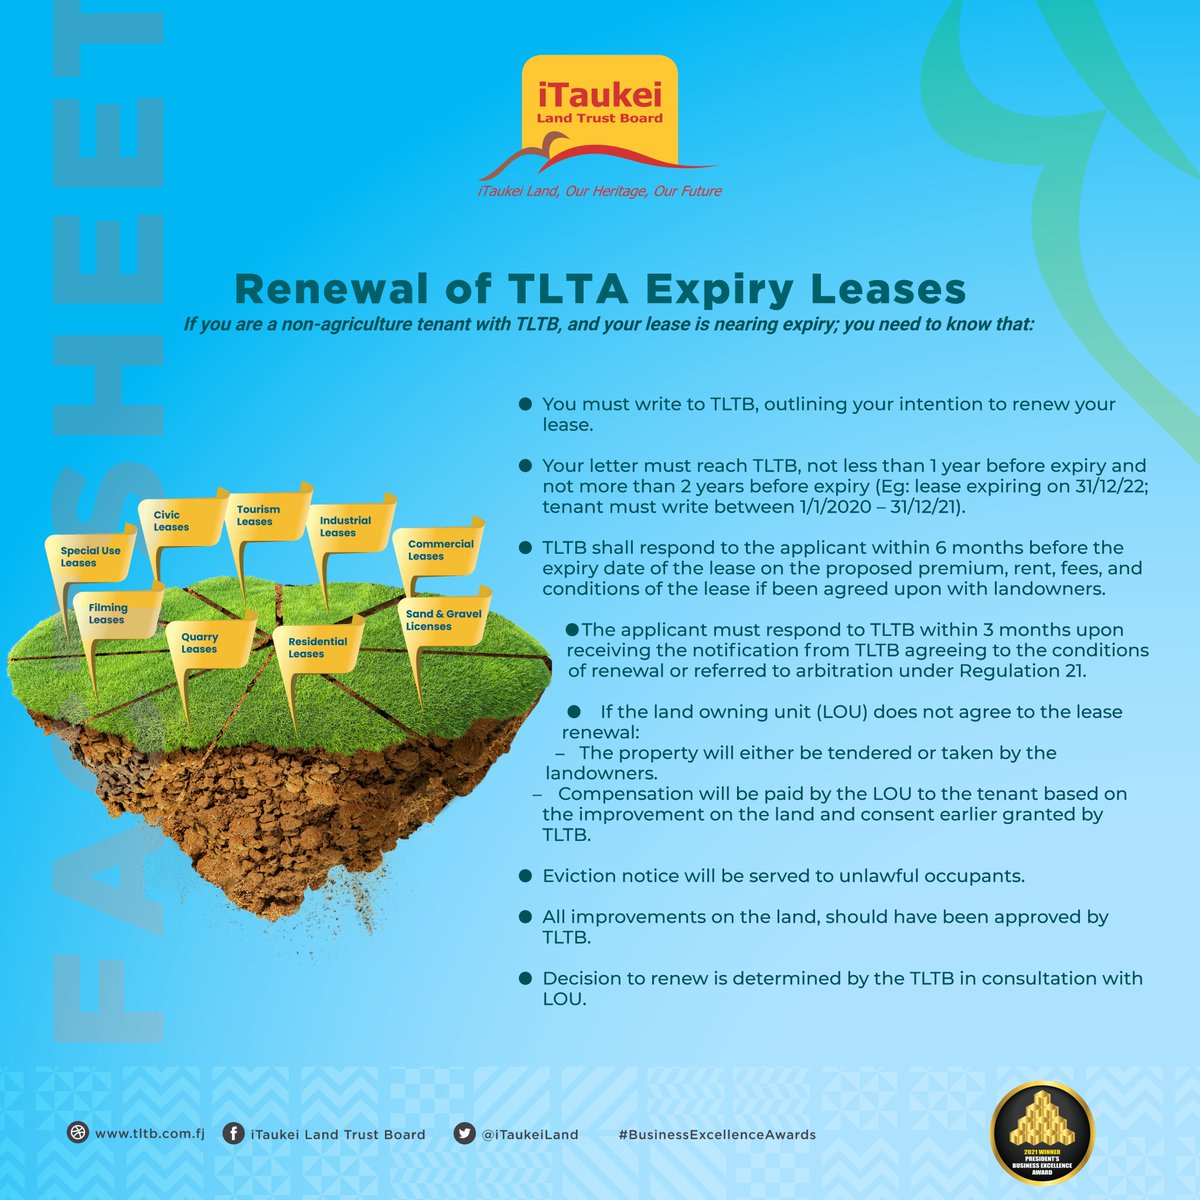 RENEWAL OF TLTA LEASES
#leaseexpiry #LeaseRenewal #TLTA